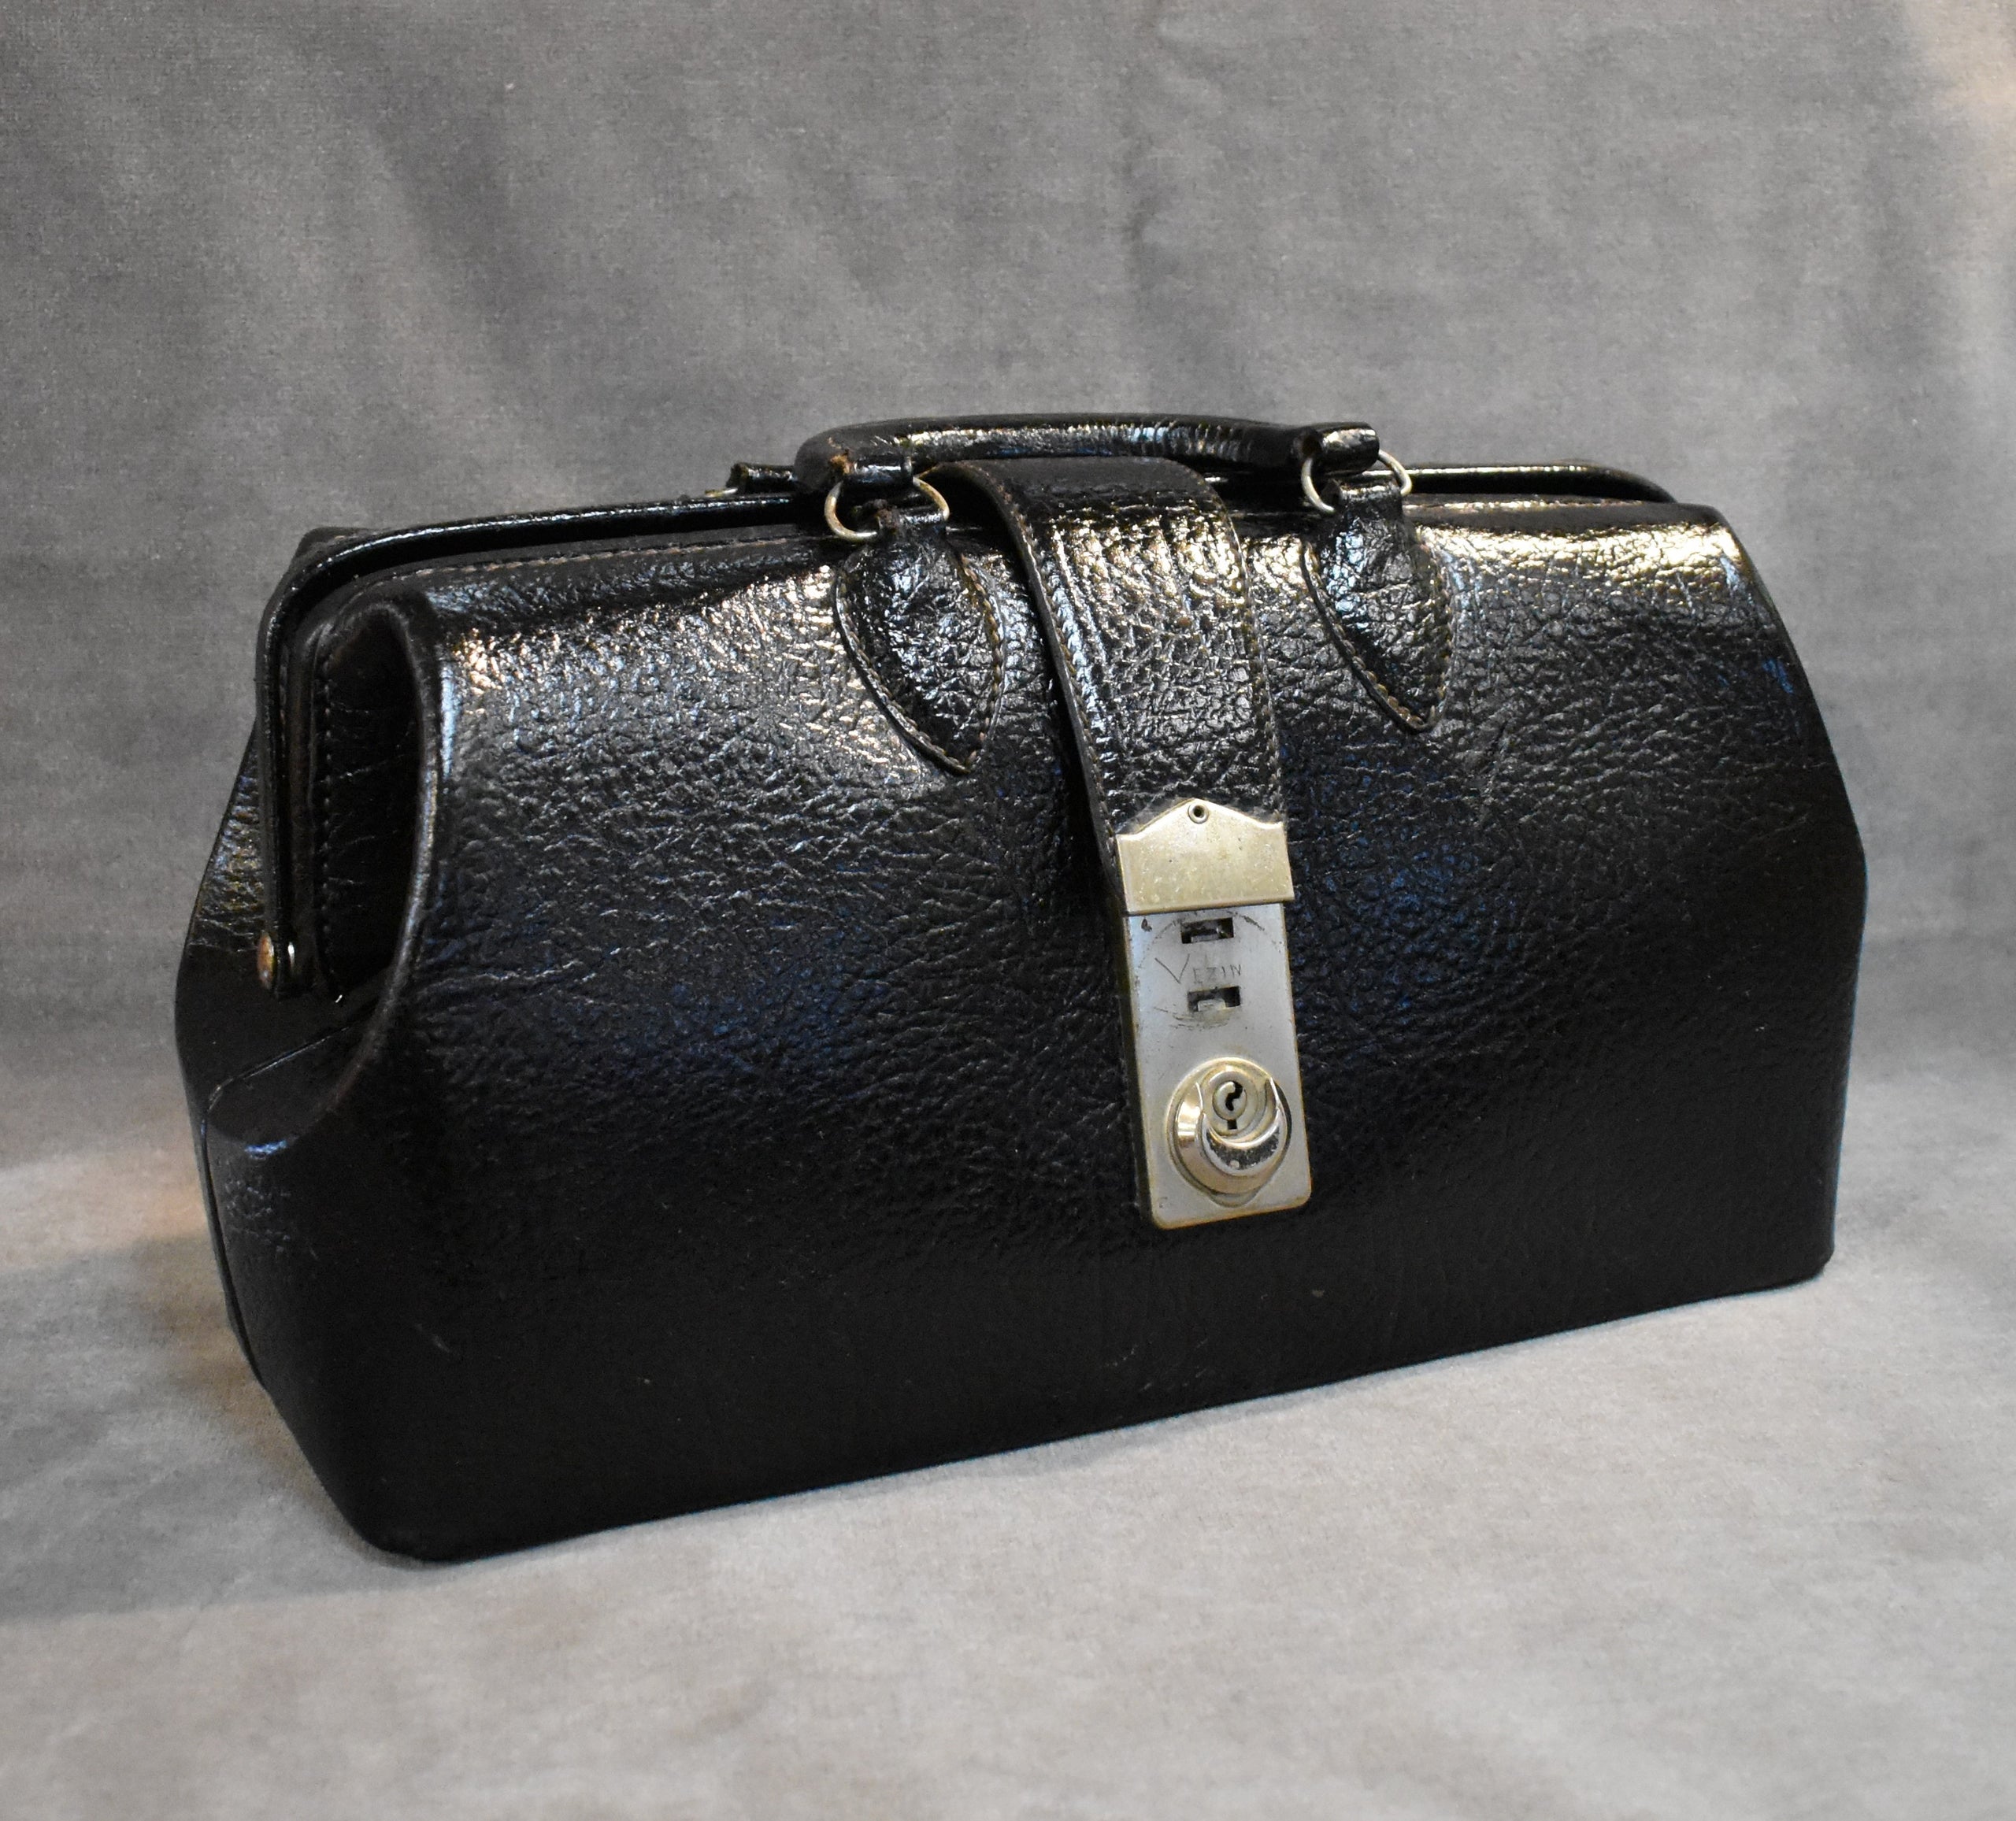 Antique Leather Cowhide Doctor Medical Bag 